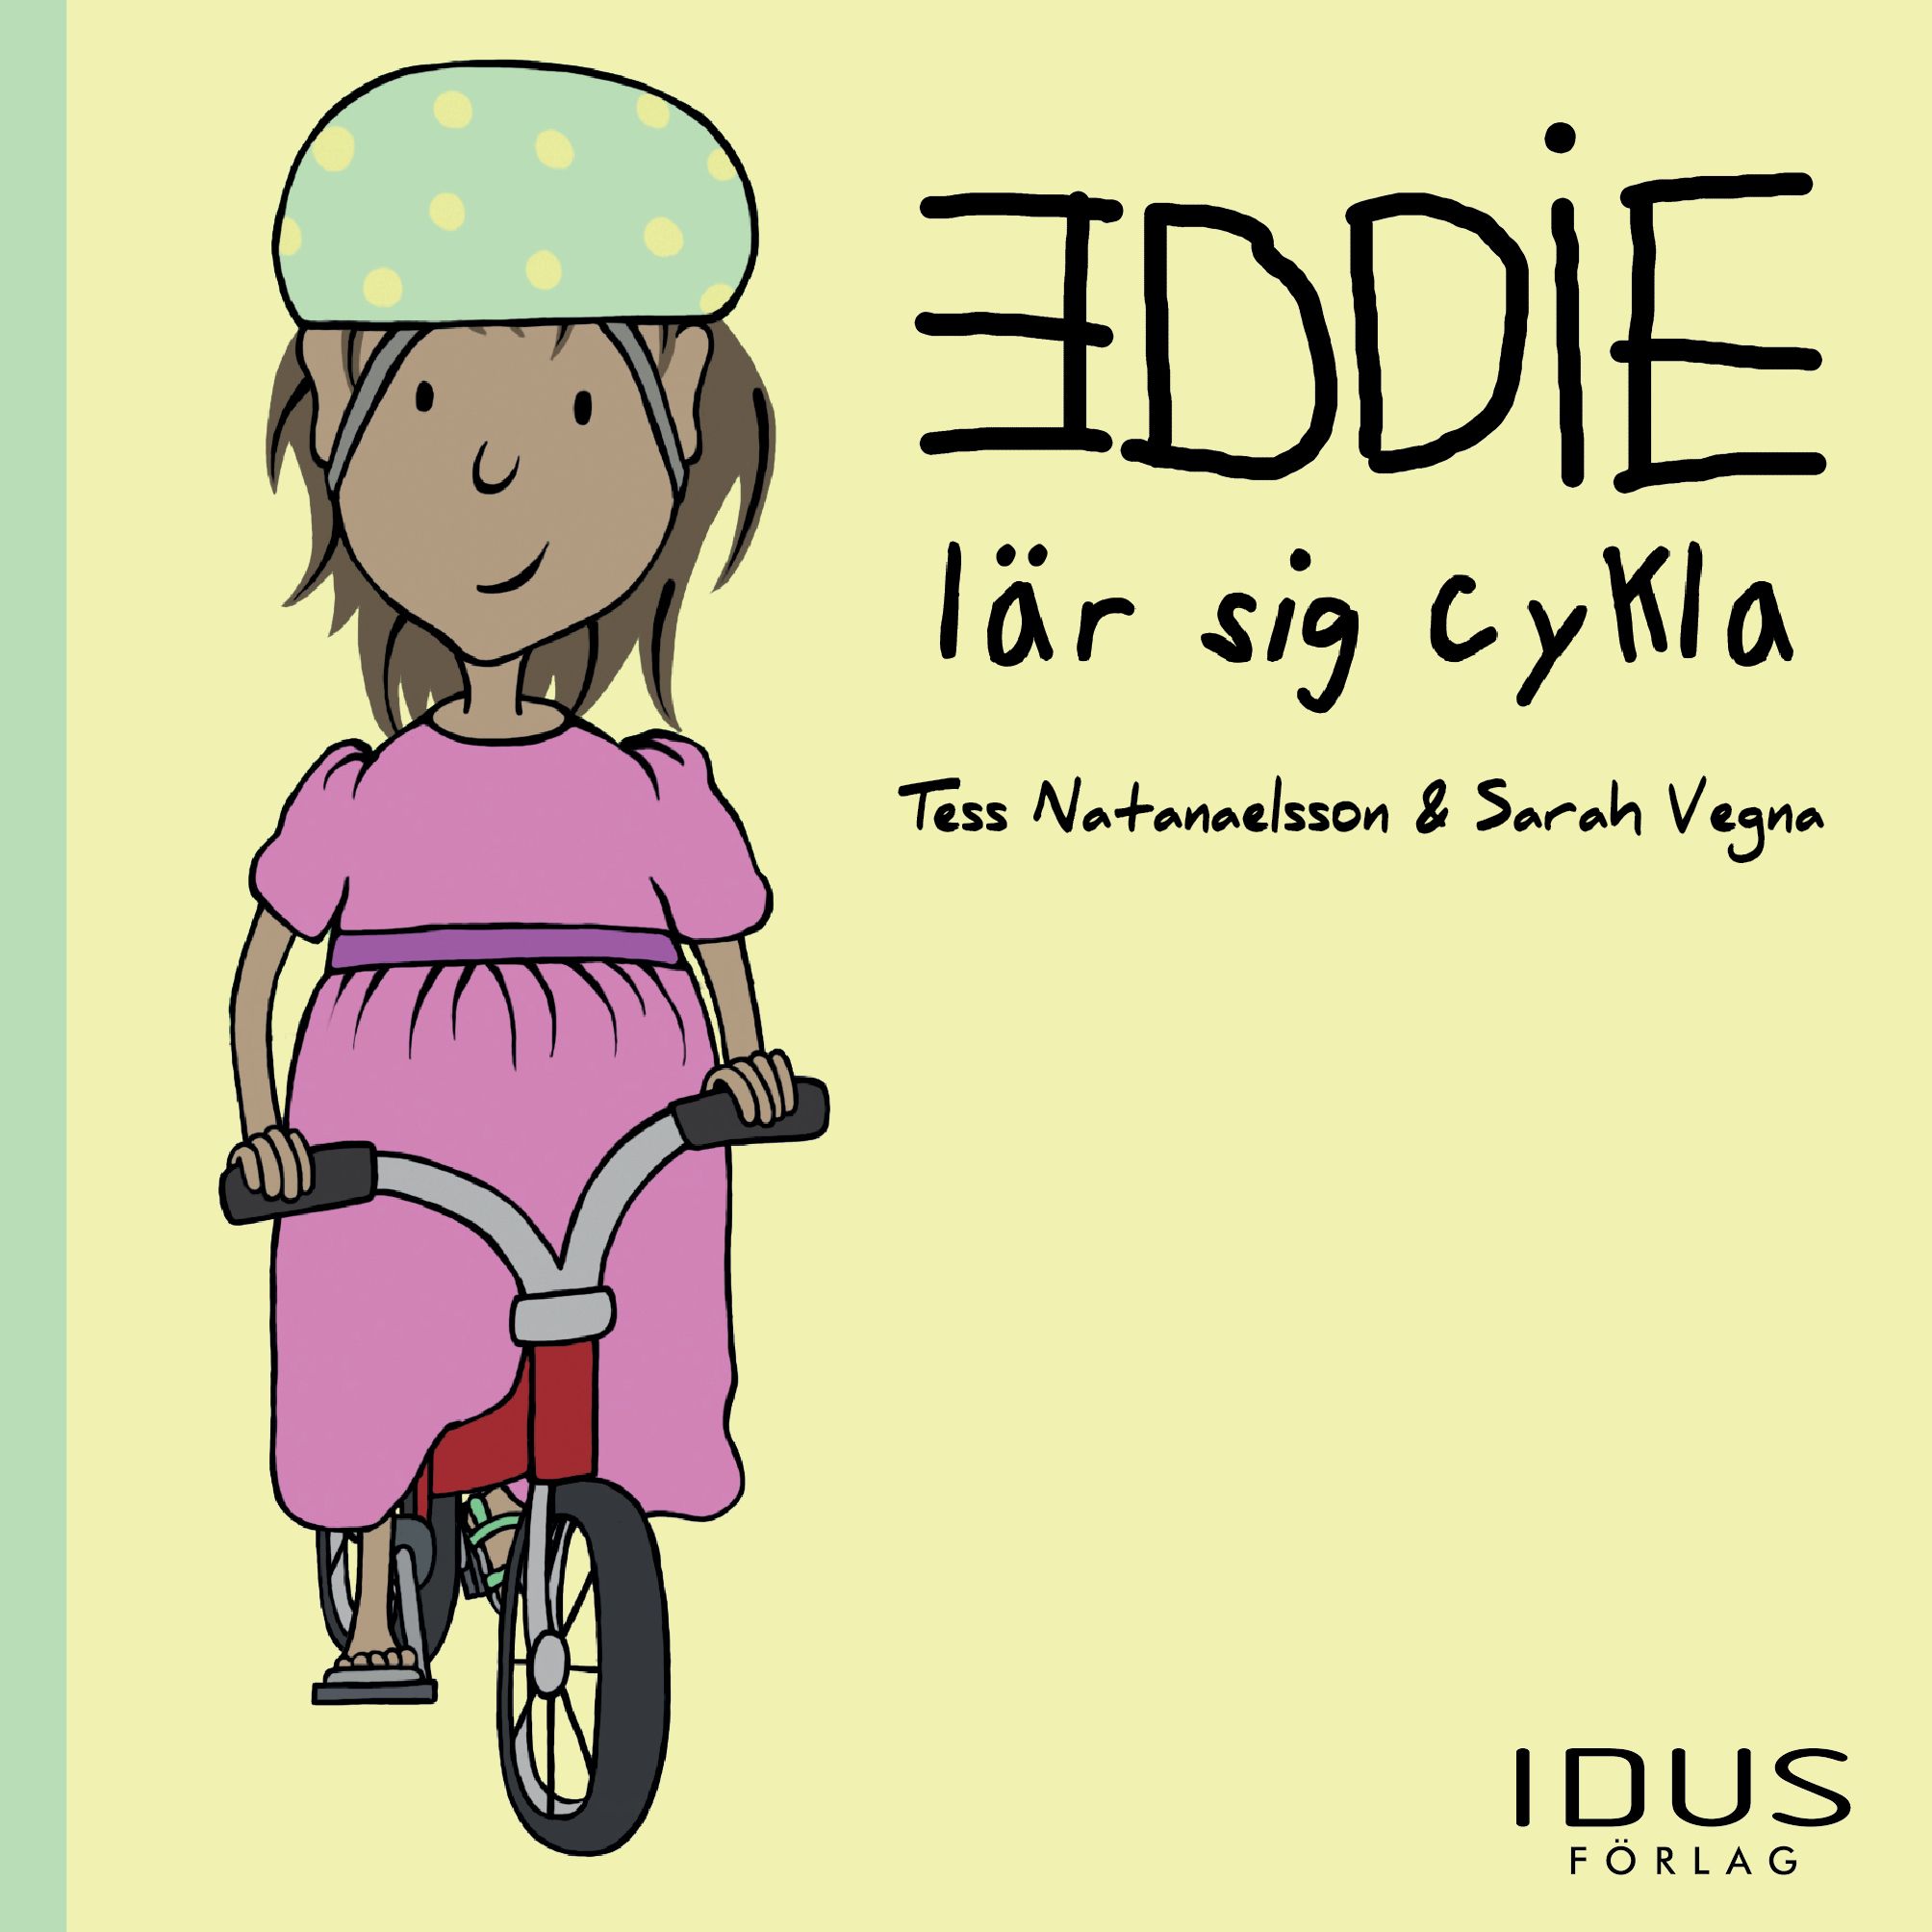 Eddie lär sig cykla, eBook by Tess Natanaelsson, Sarah Vegna